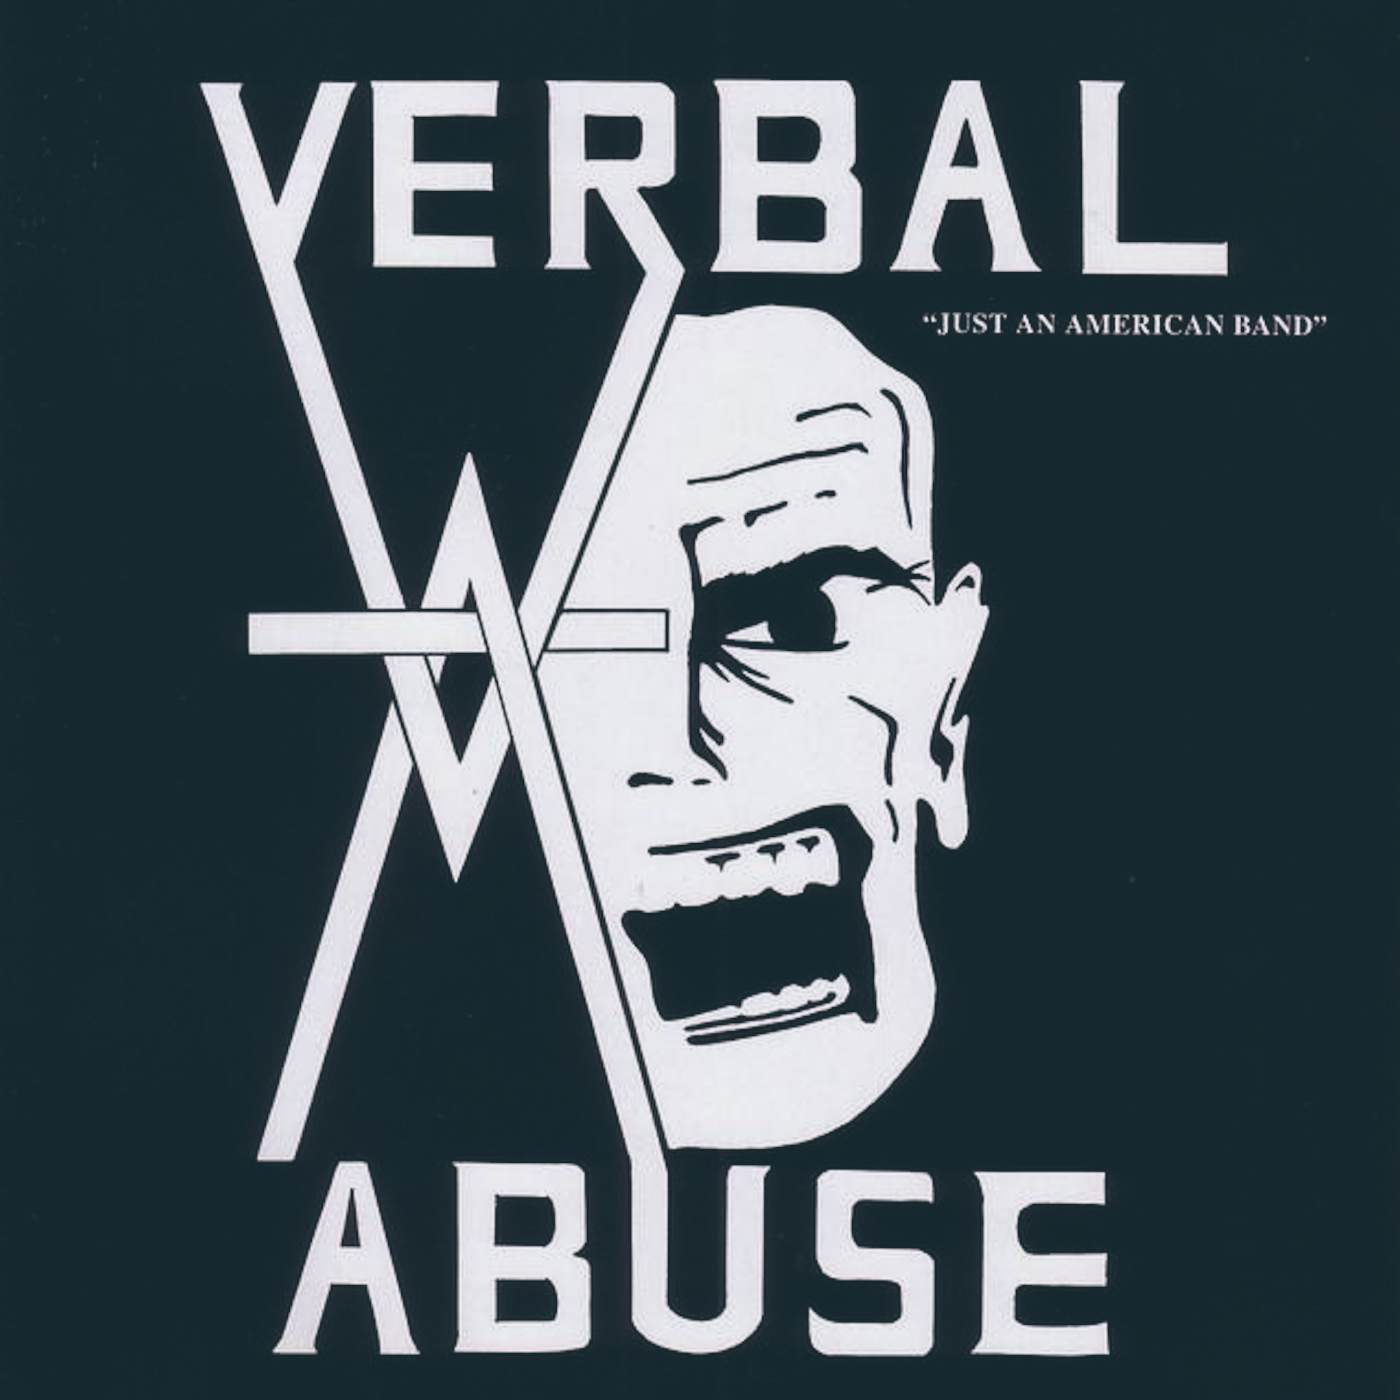 Verbal Abuse